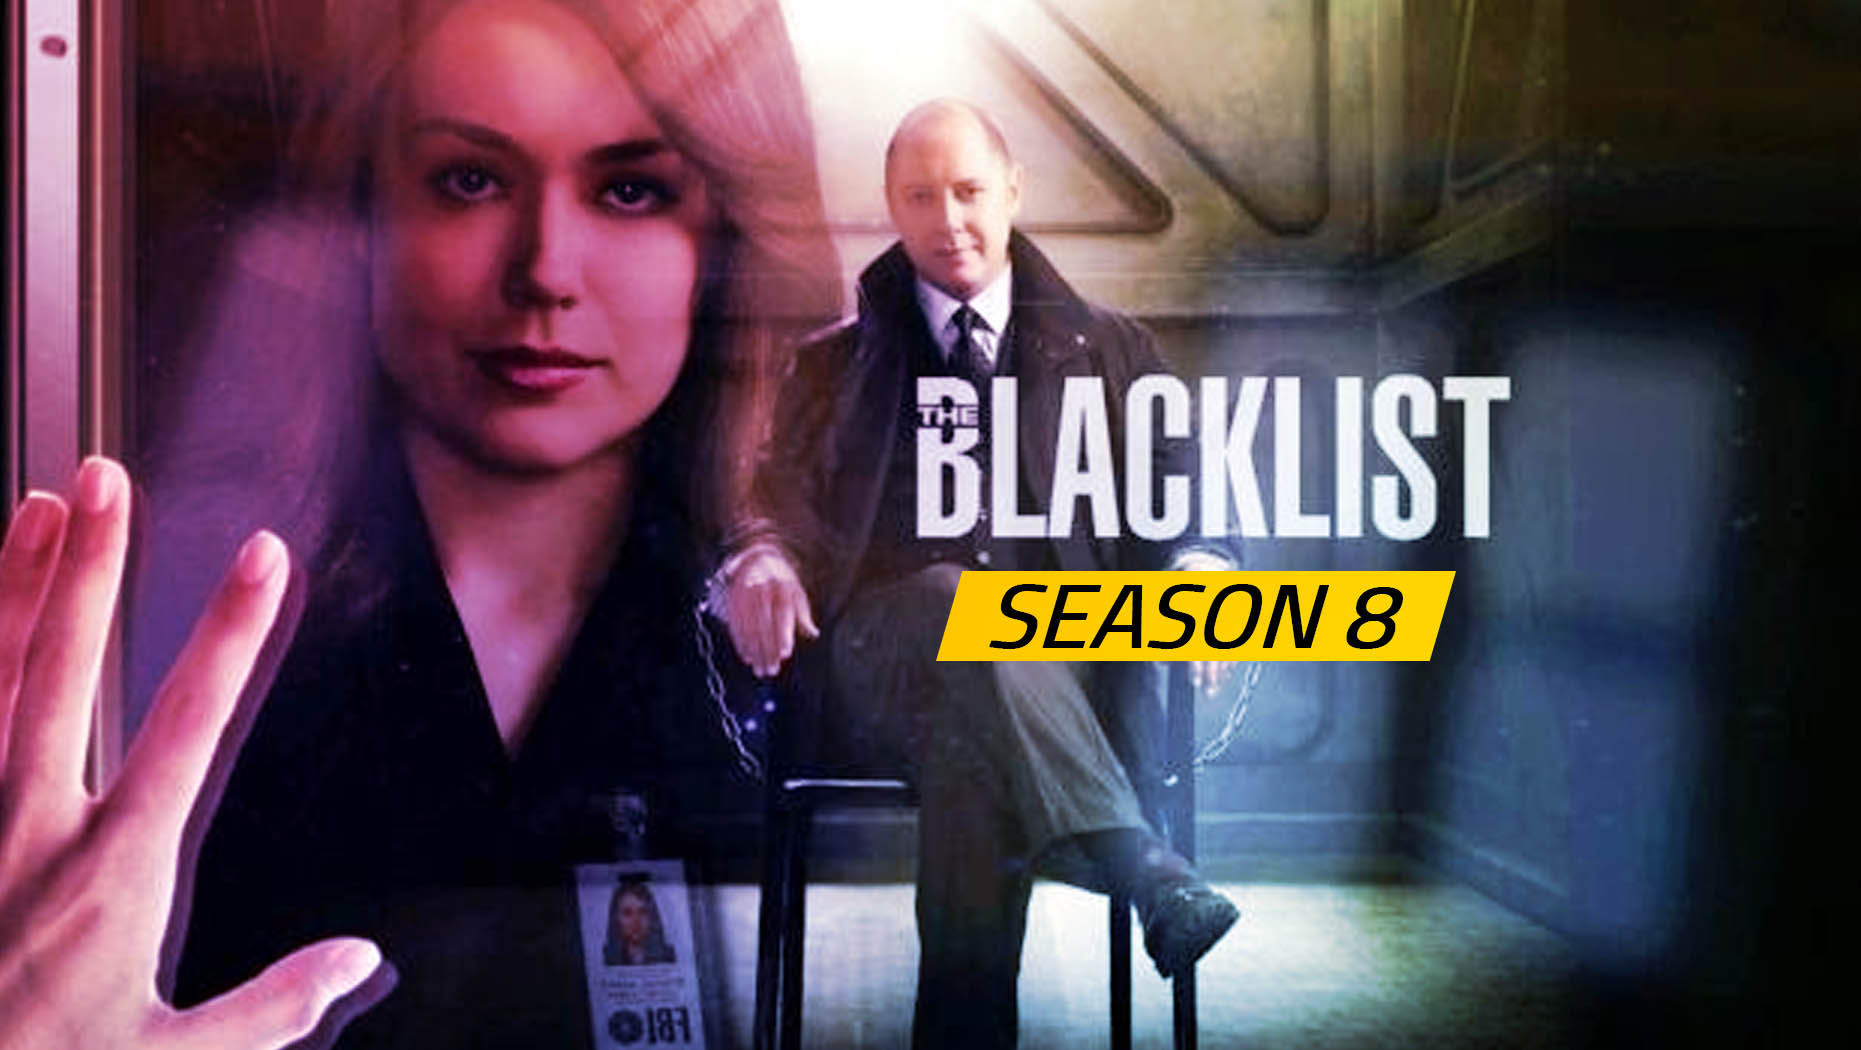 Episode season 21 blacklist 8 the The Blacklist